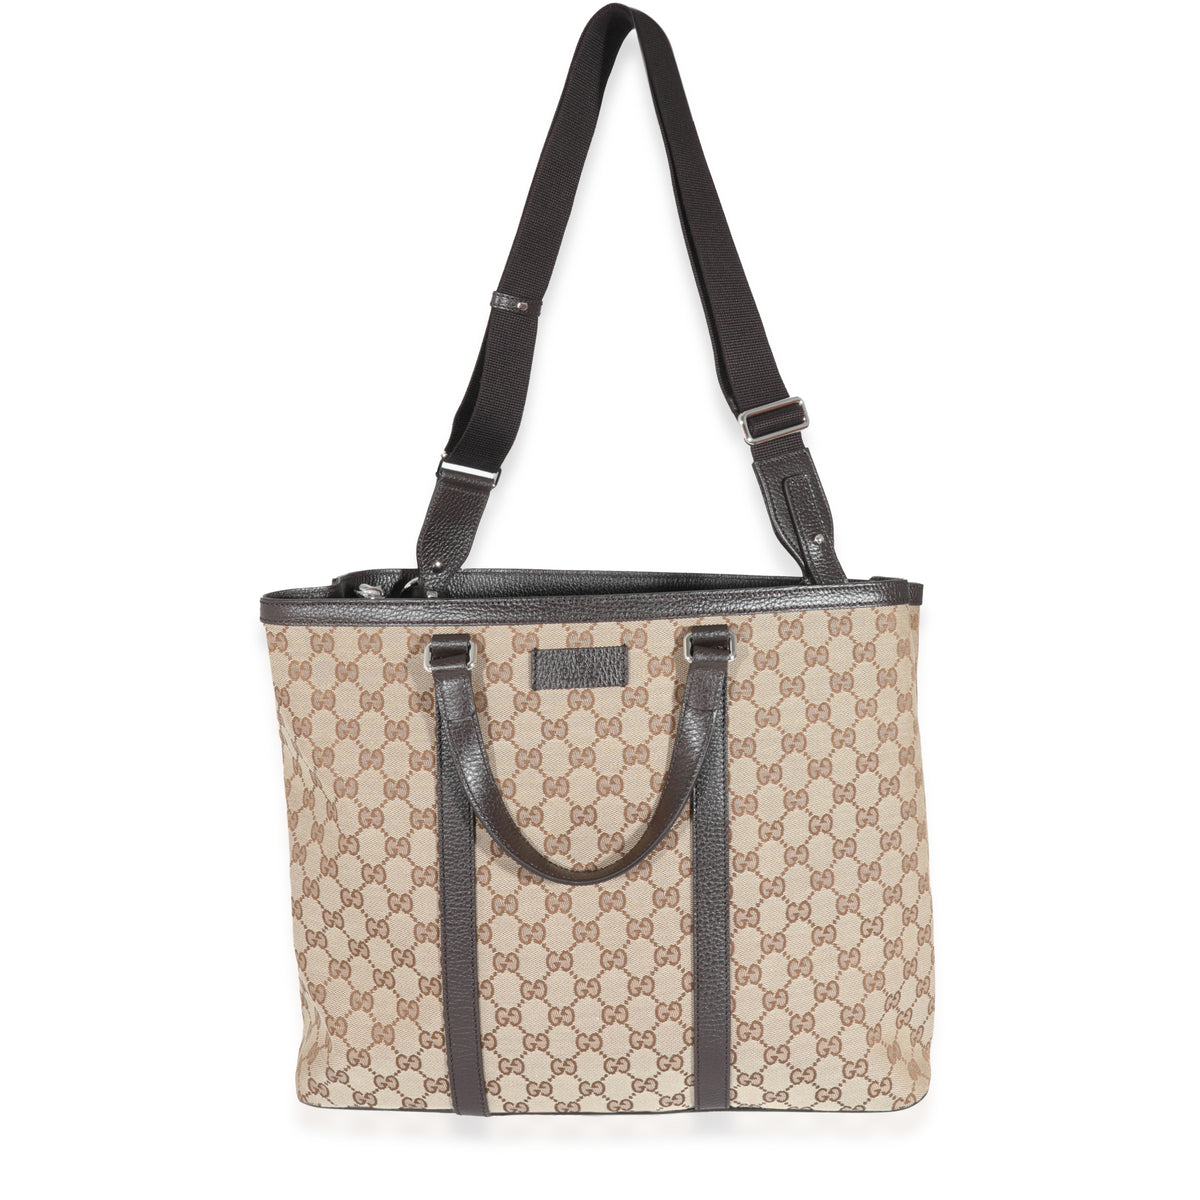 Gucci Unisex Brown Original GG Shopping Tote Handbag 449169 